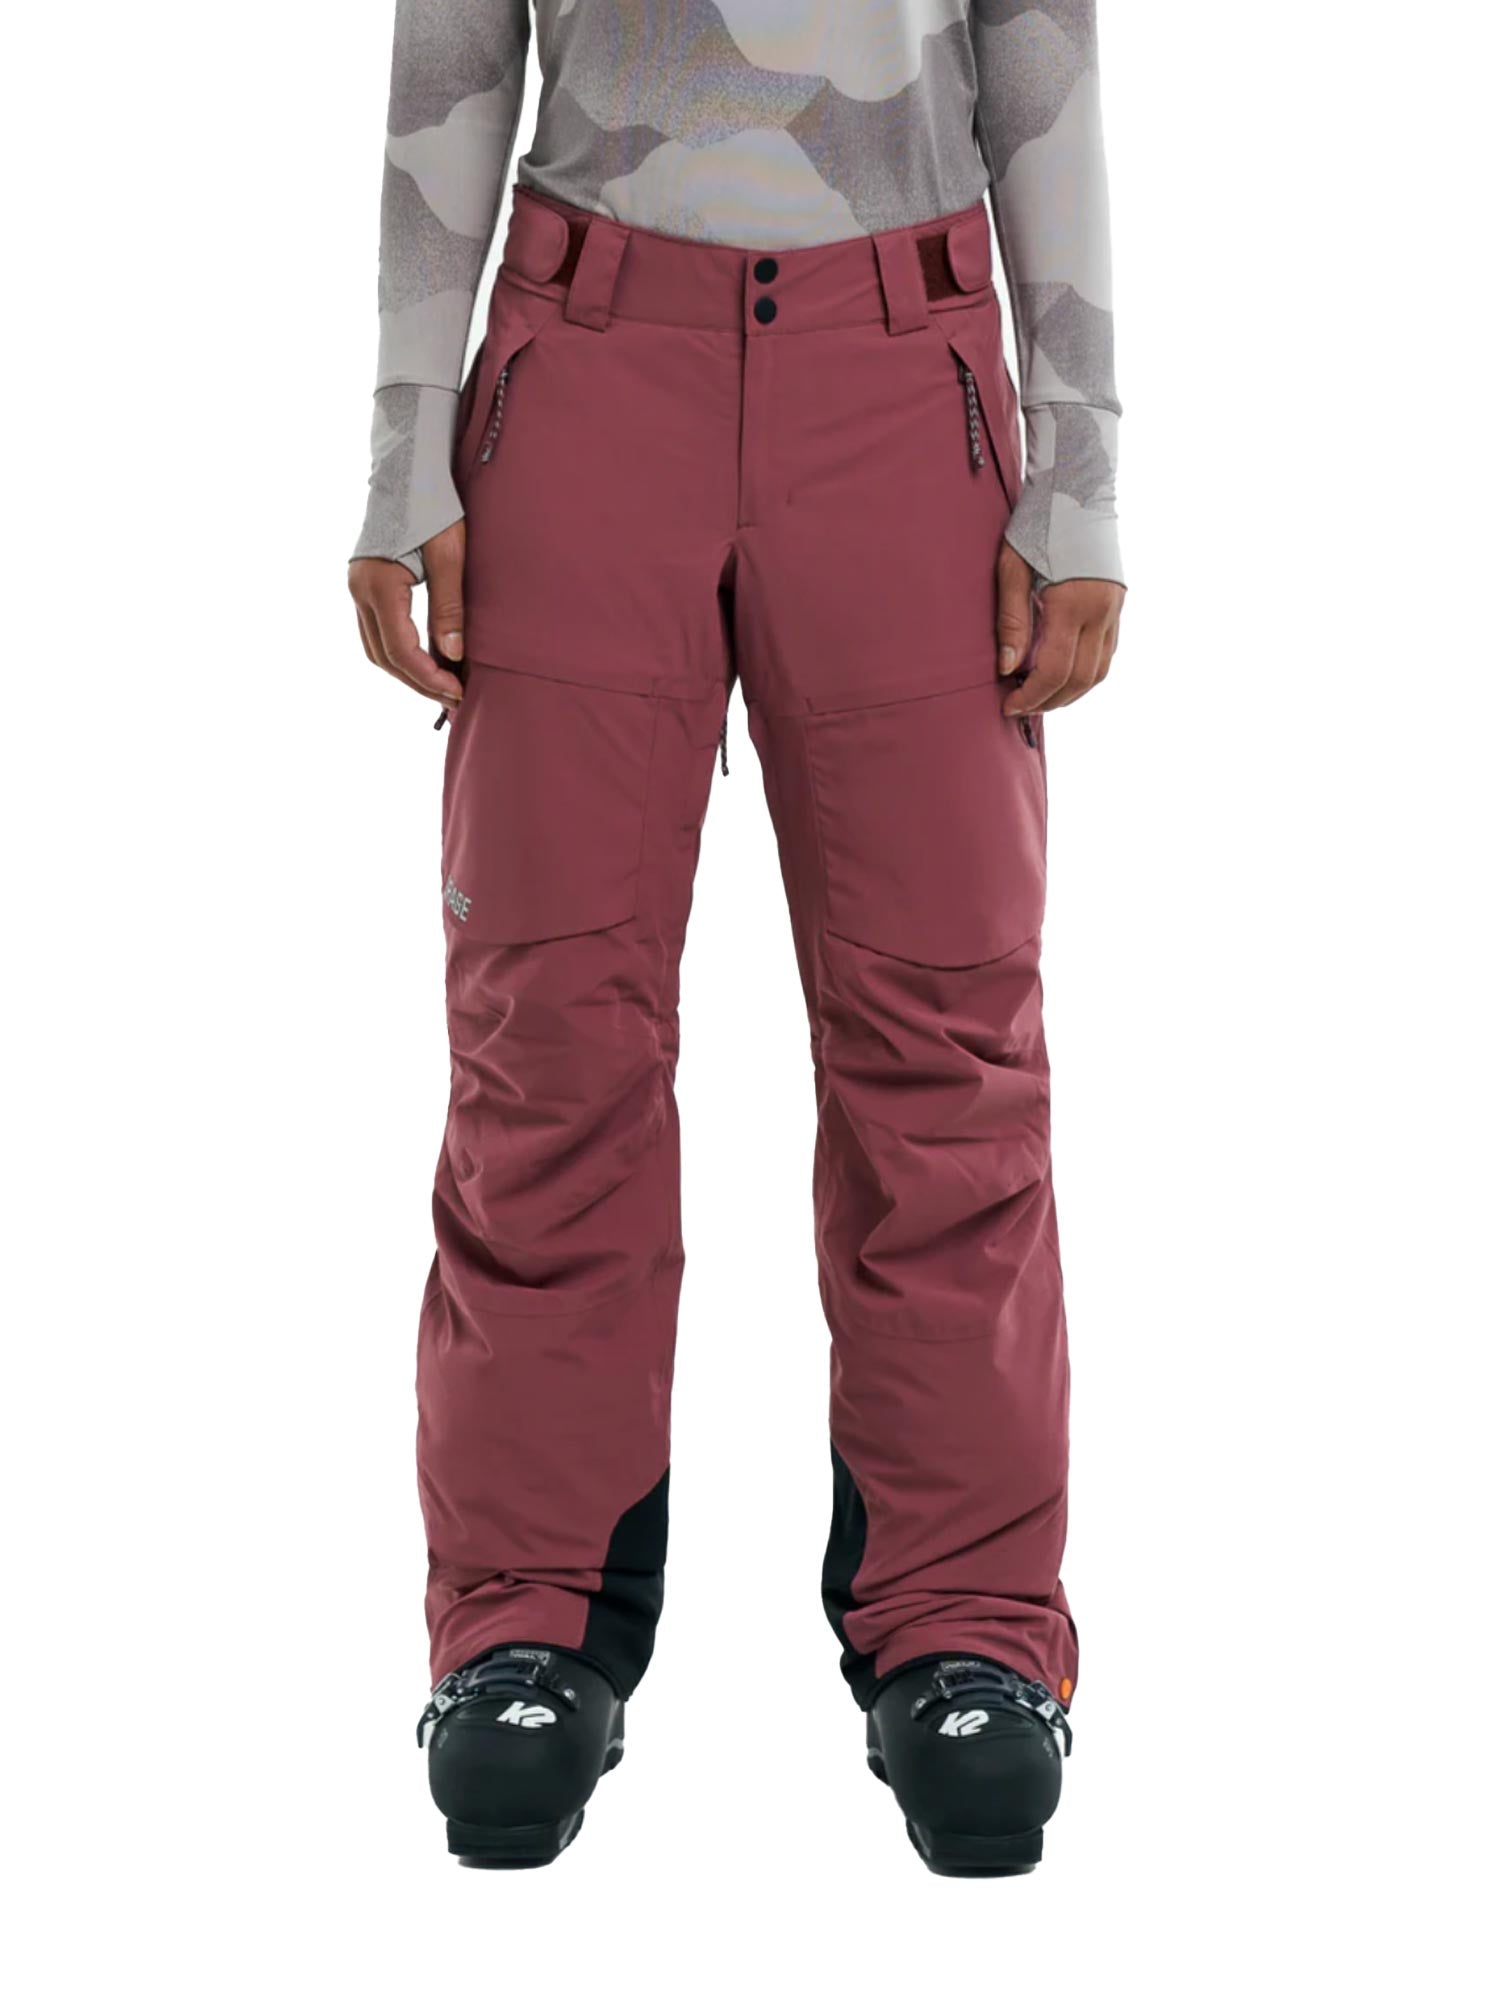 cherry Orage ski pants